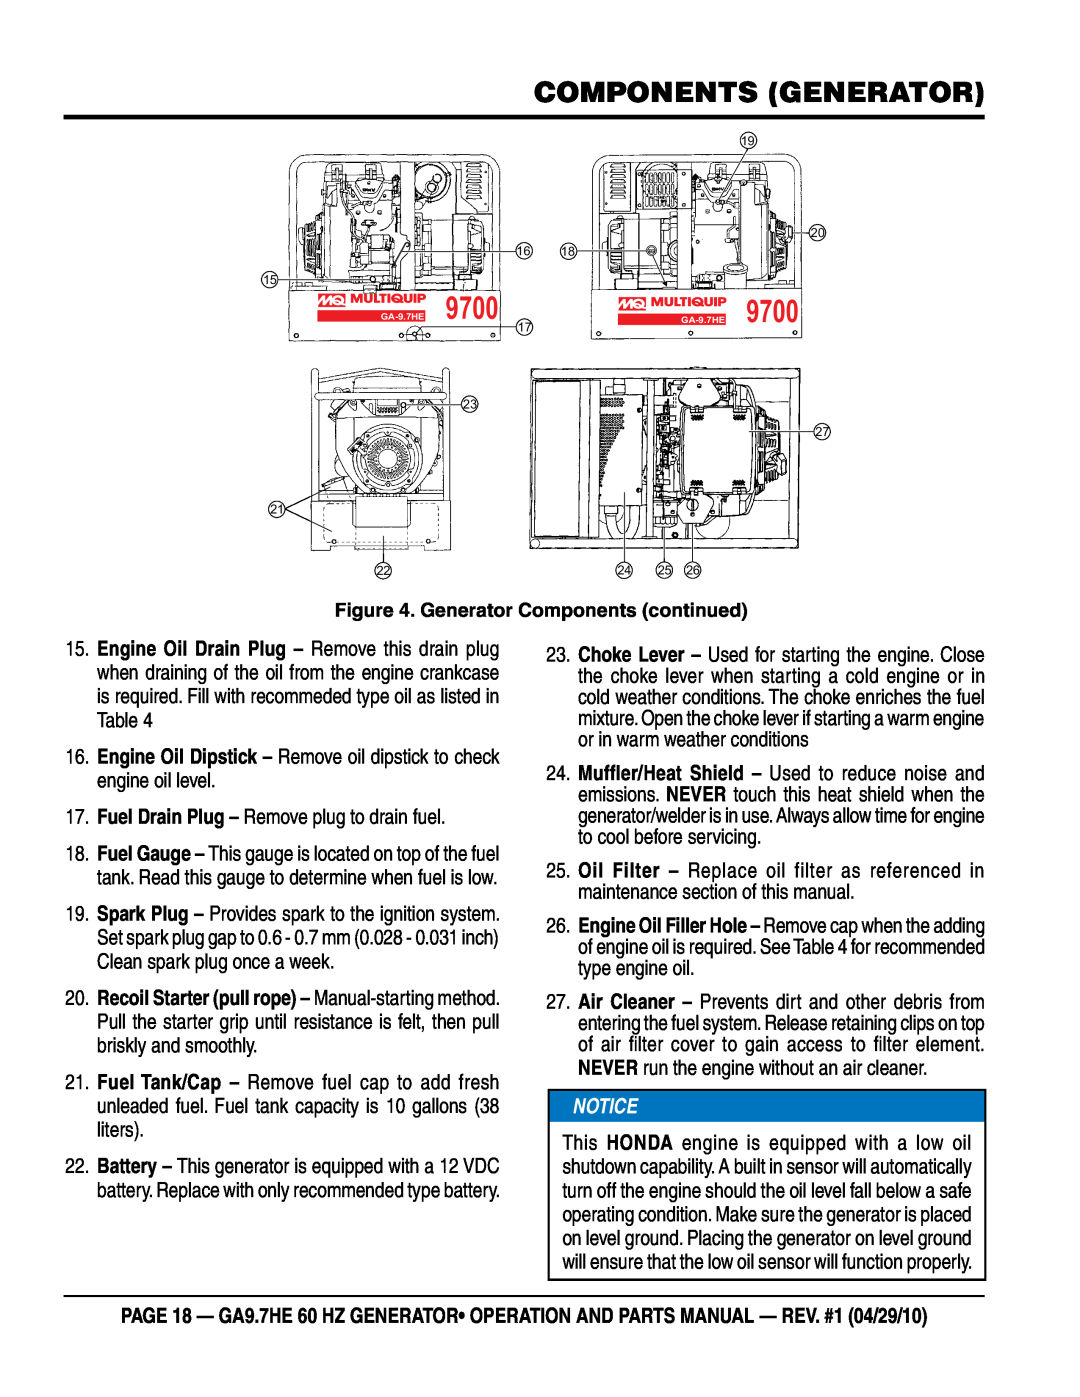 Multiquip ga-9.7HE manual 9700, components generator, Fuel Drain Plug - Remove plug to drain fuel 